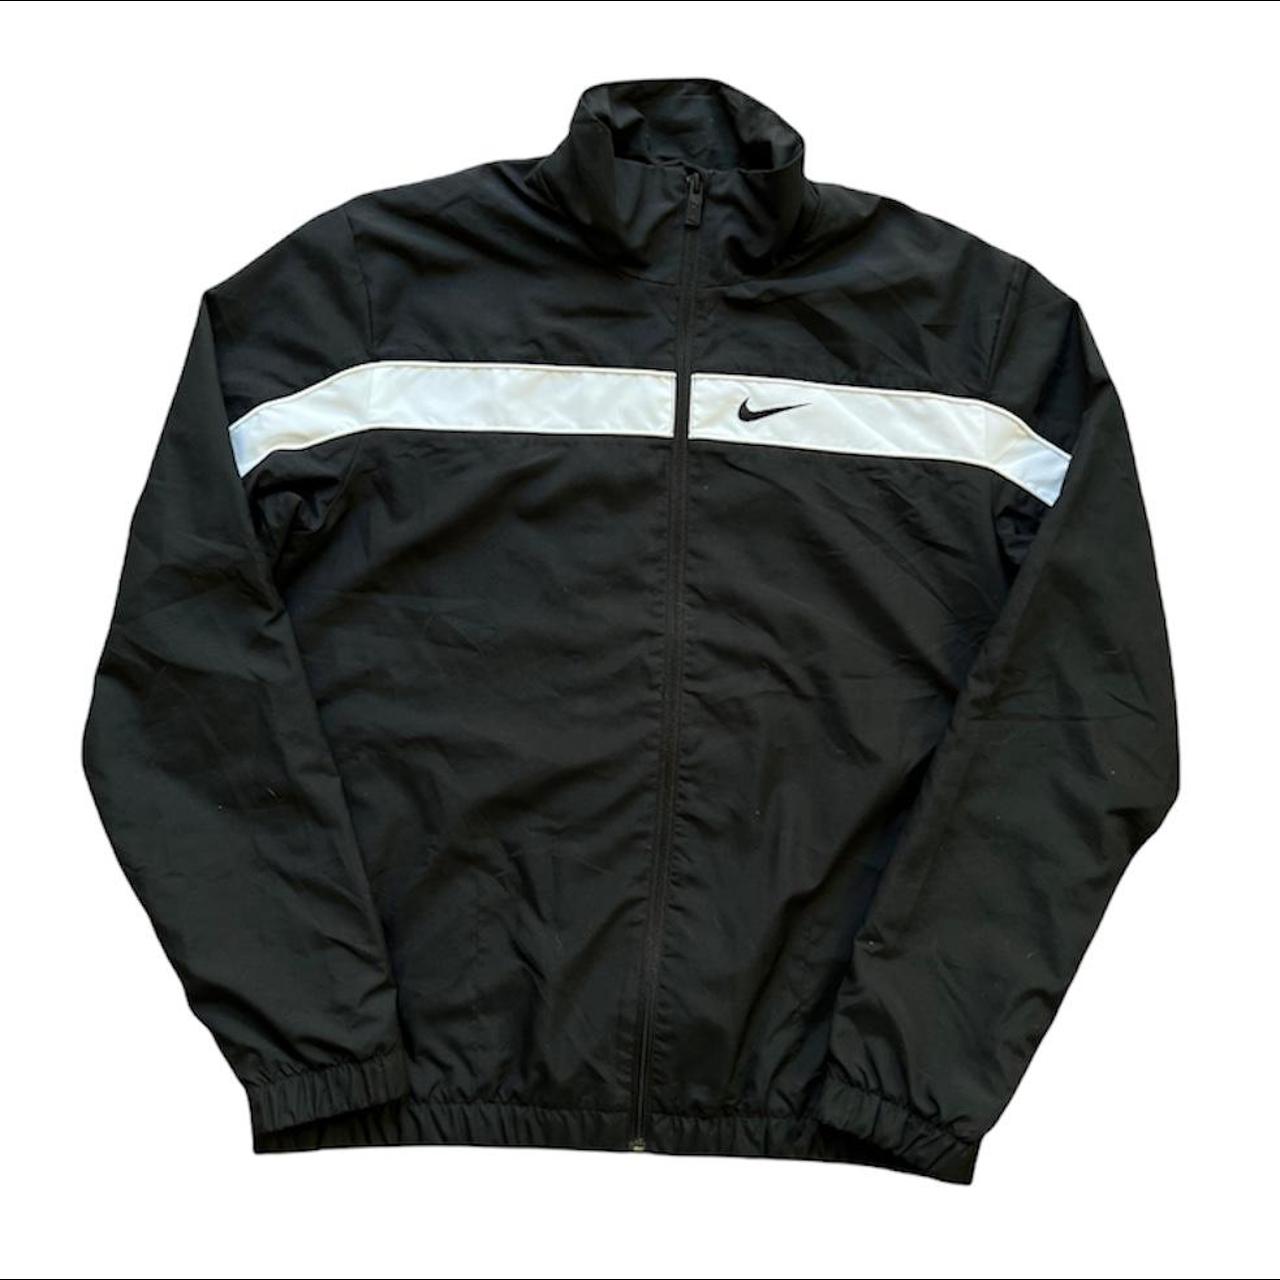 Nike Black White Striped Tracksuit Jacket. Good... - Depop